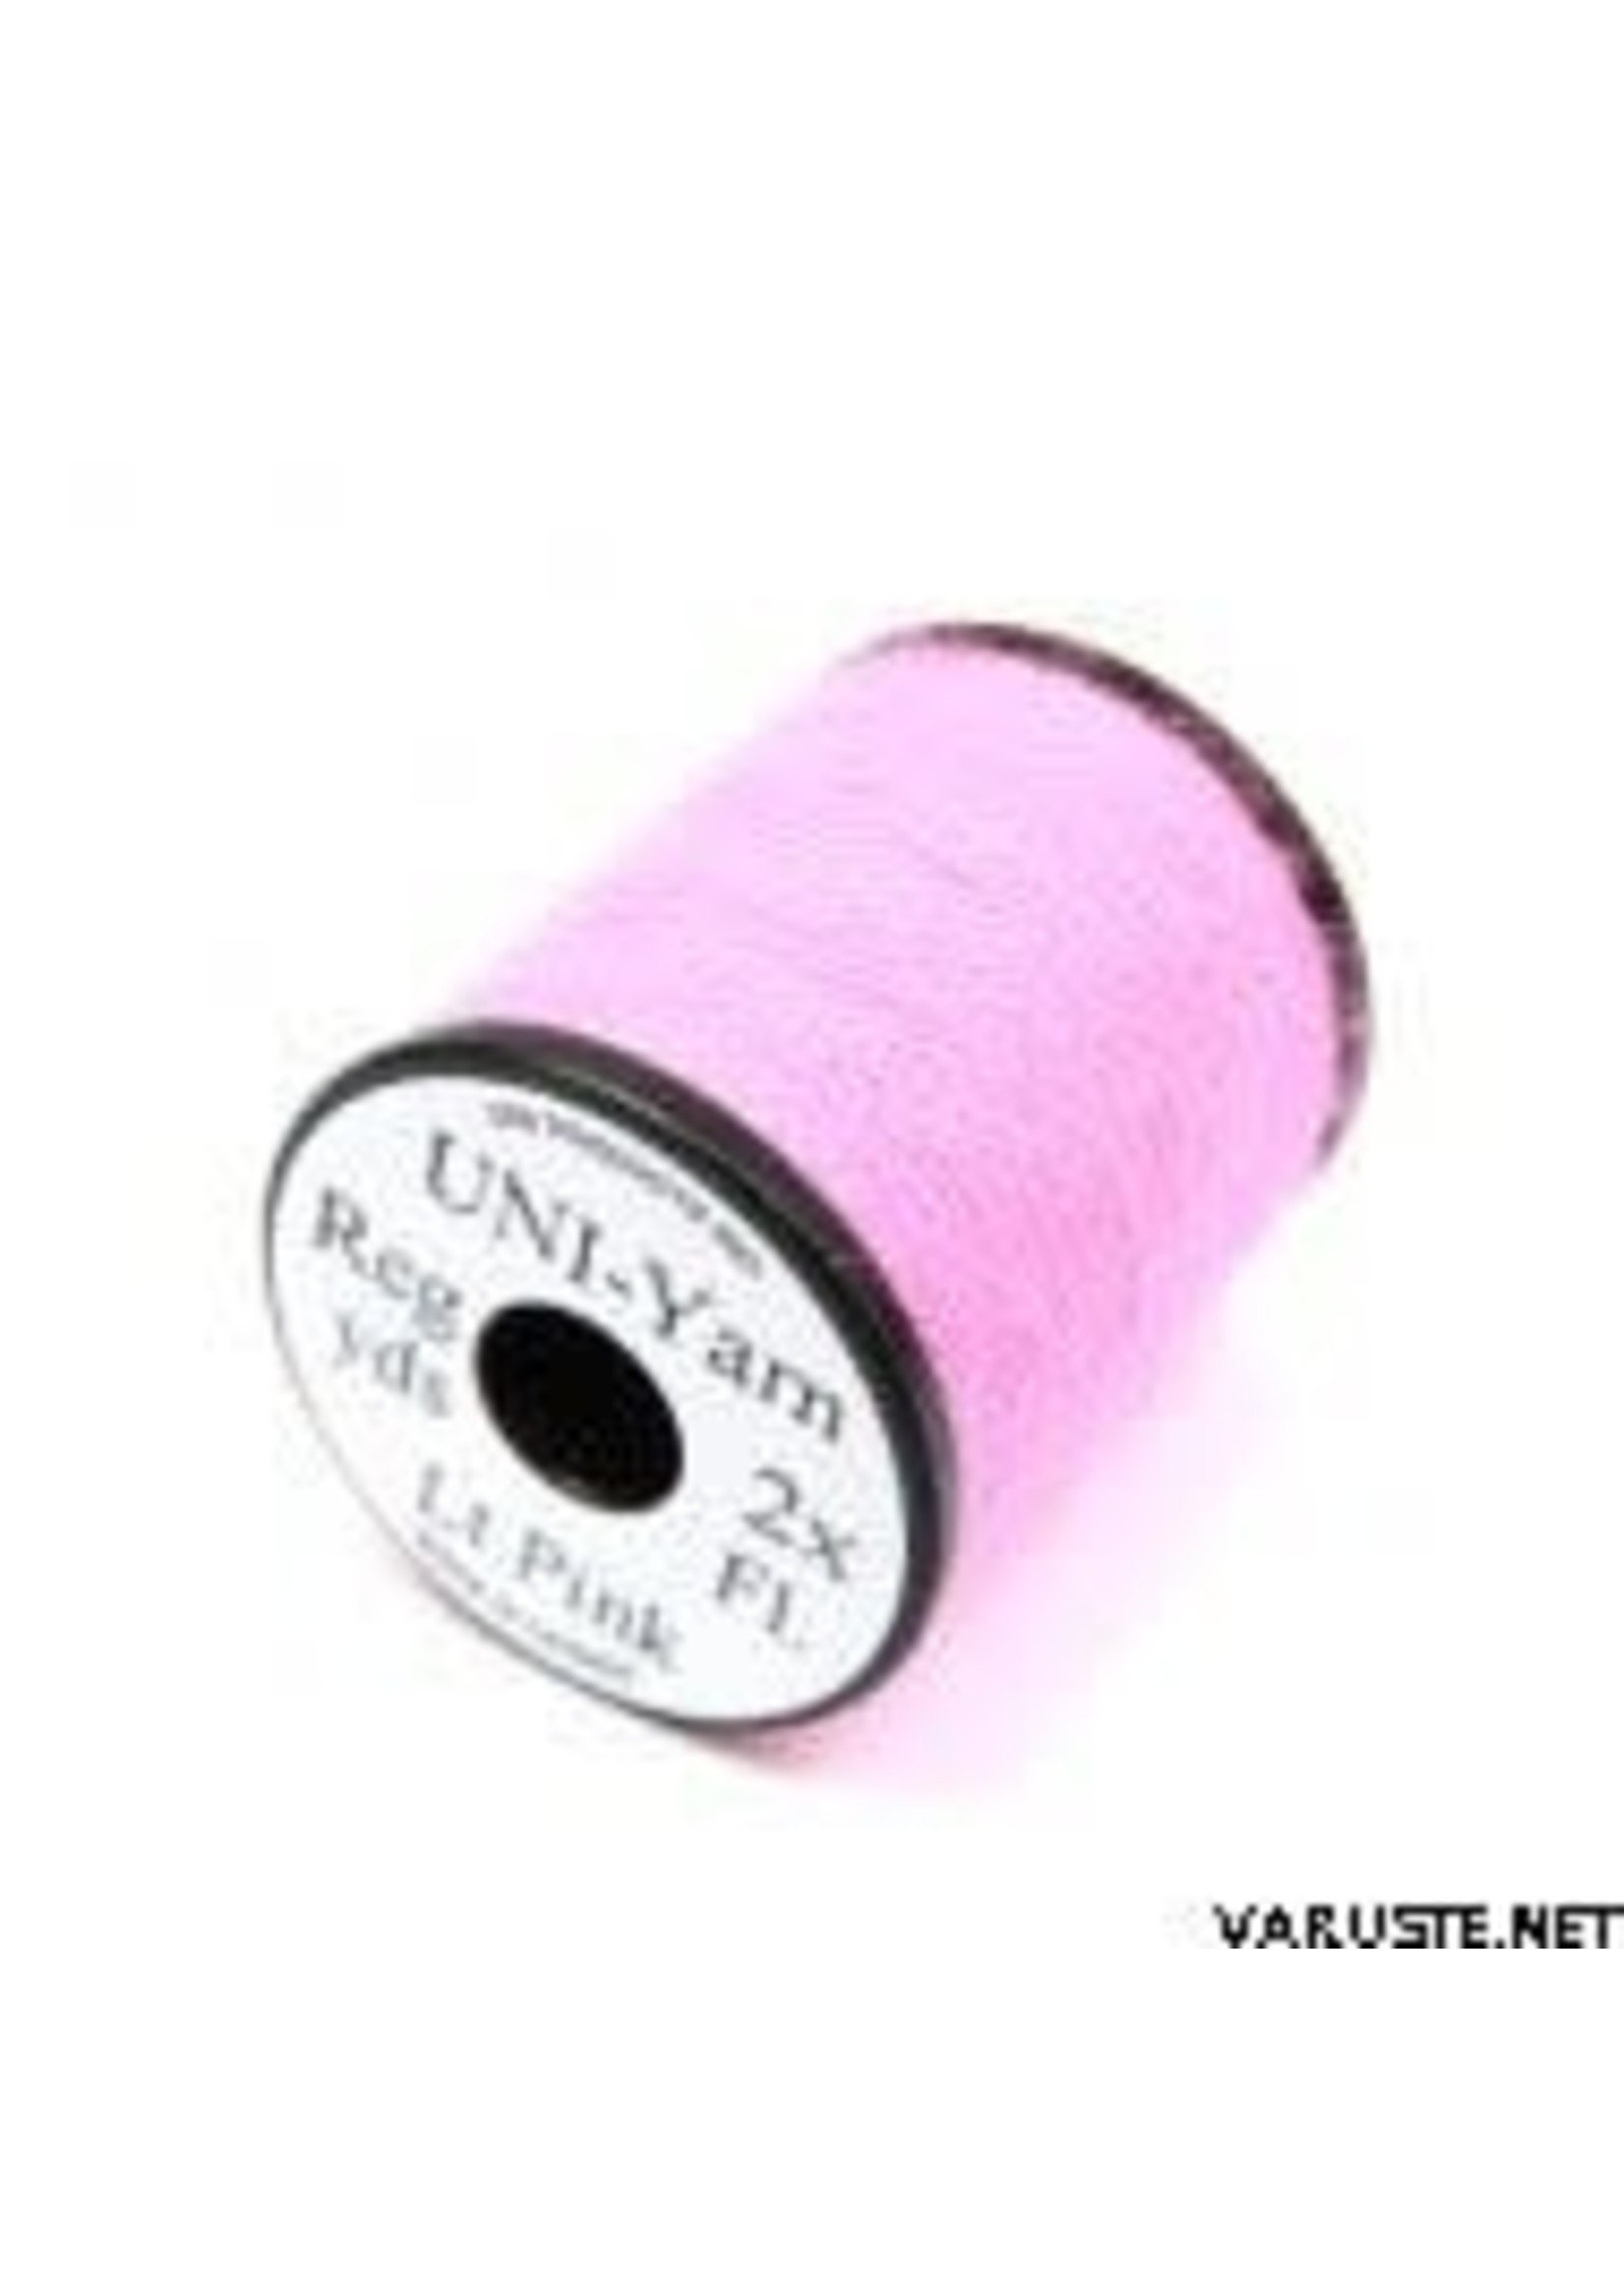 Uni- Yarn Flo. Light Pink Spool17 Yards